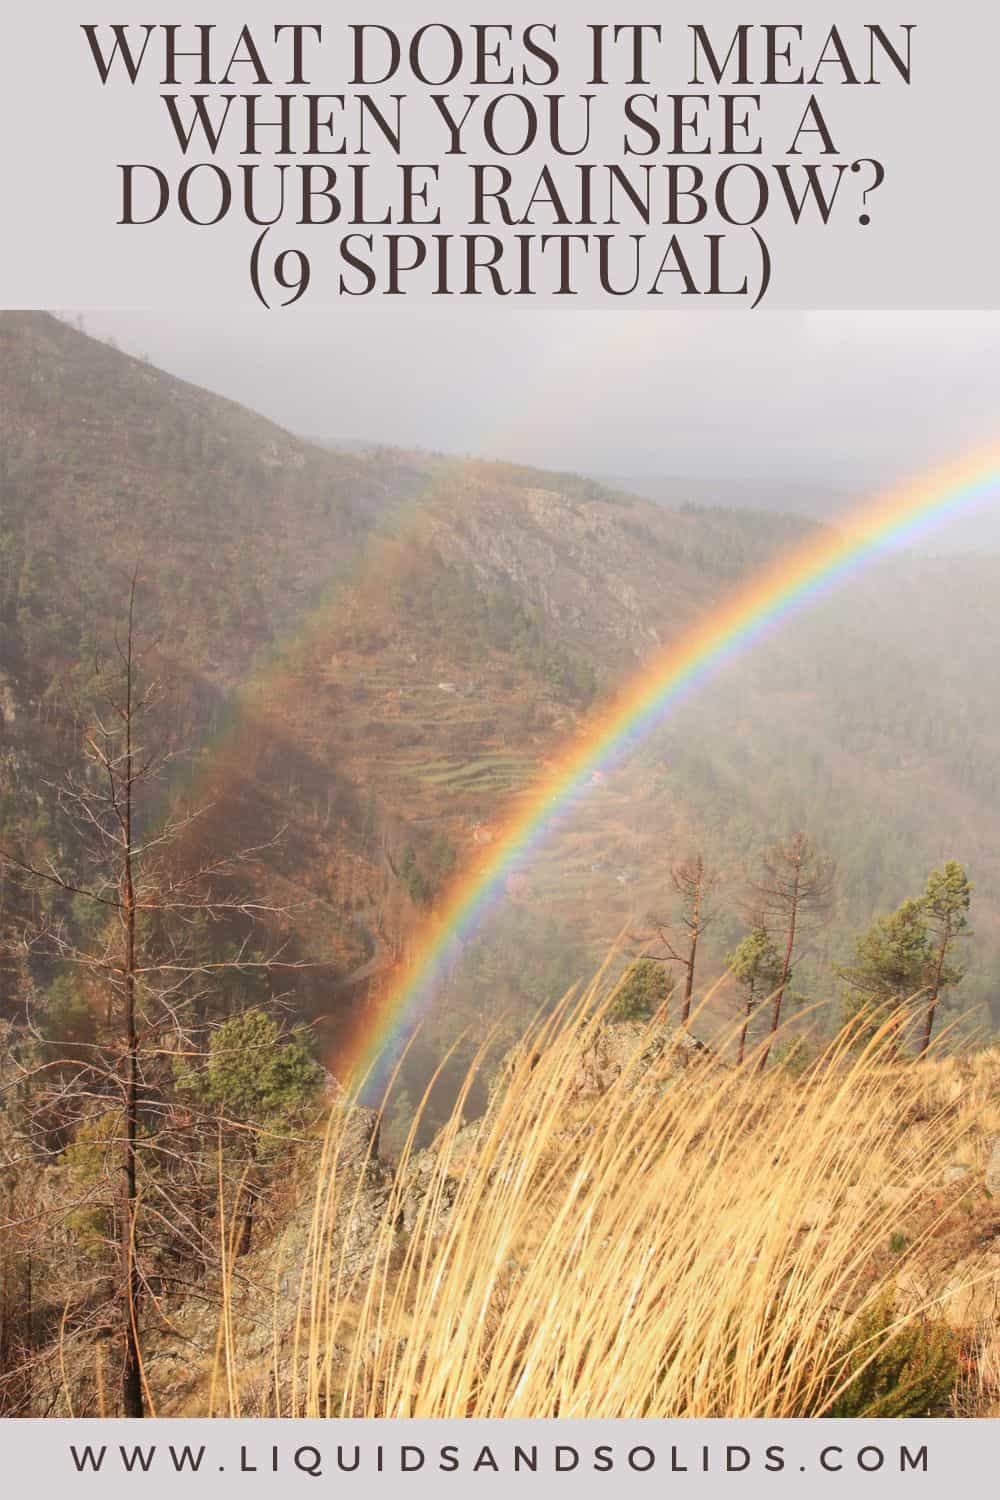  Hvad betyder det, når du ser en dobbelt regnbue? (9 spirituelle betydninger)